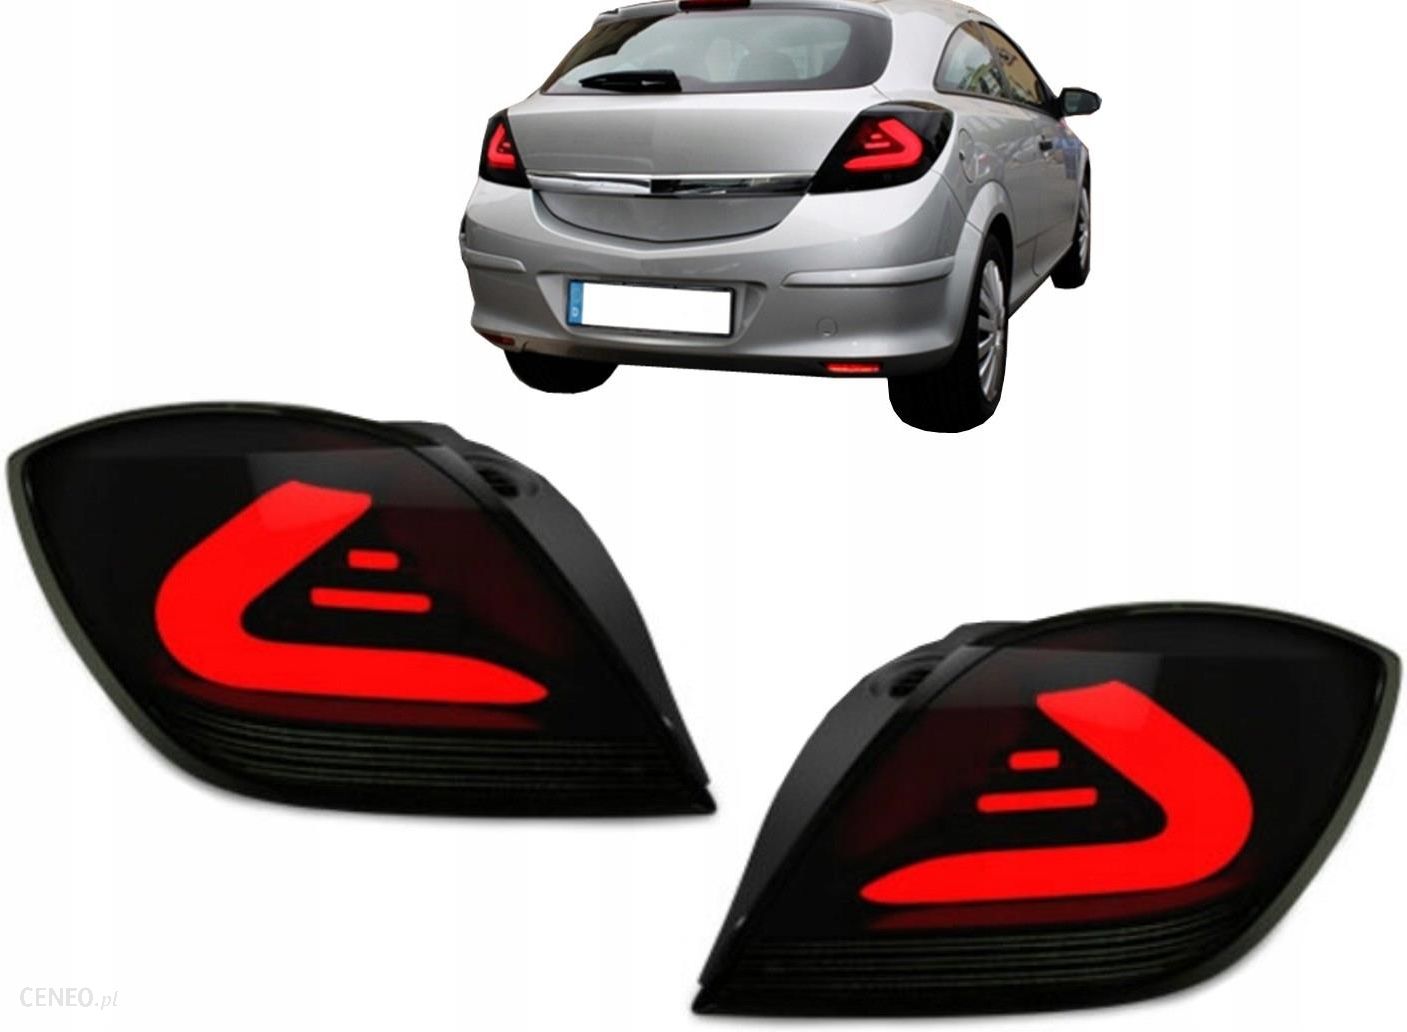 Lampa Tylna Tylne Swiatla Do Opel Astra H Gtc Led Light Bar 4983494 Opinie I Ceny Na Ceneo Pl